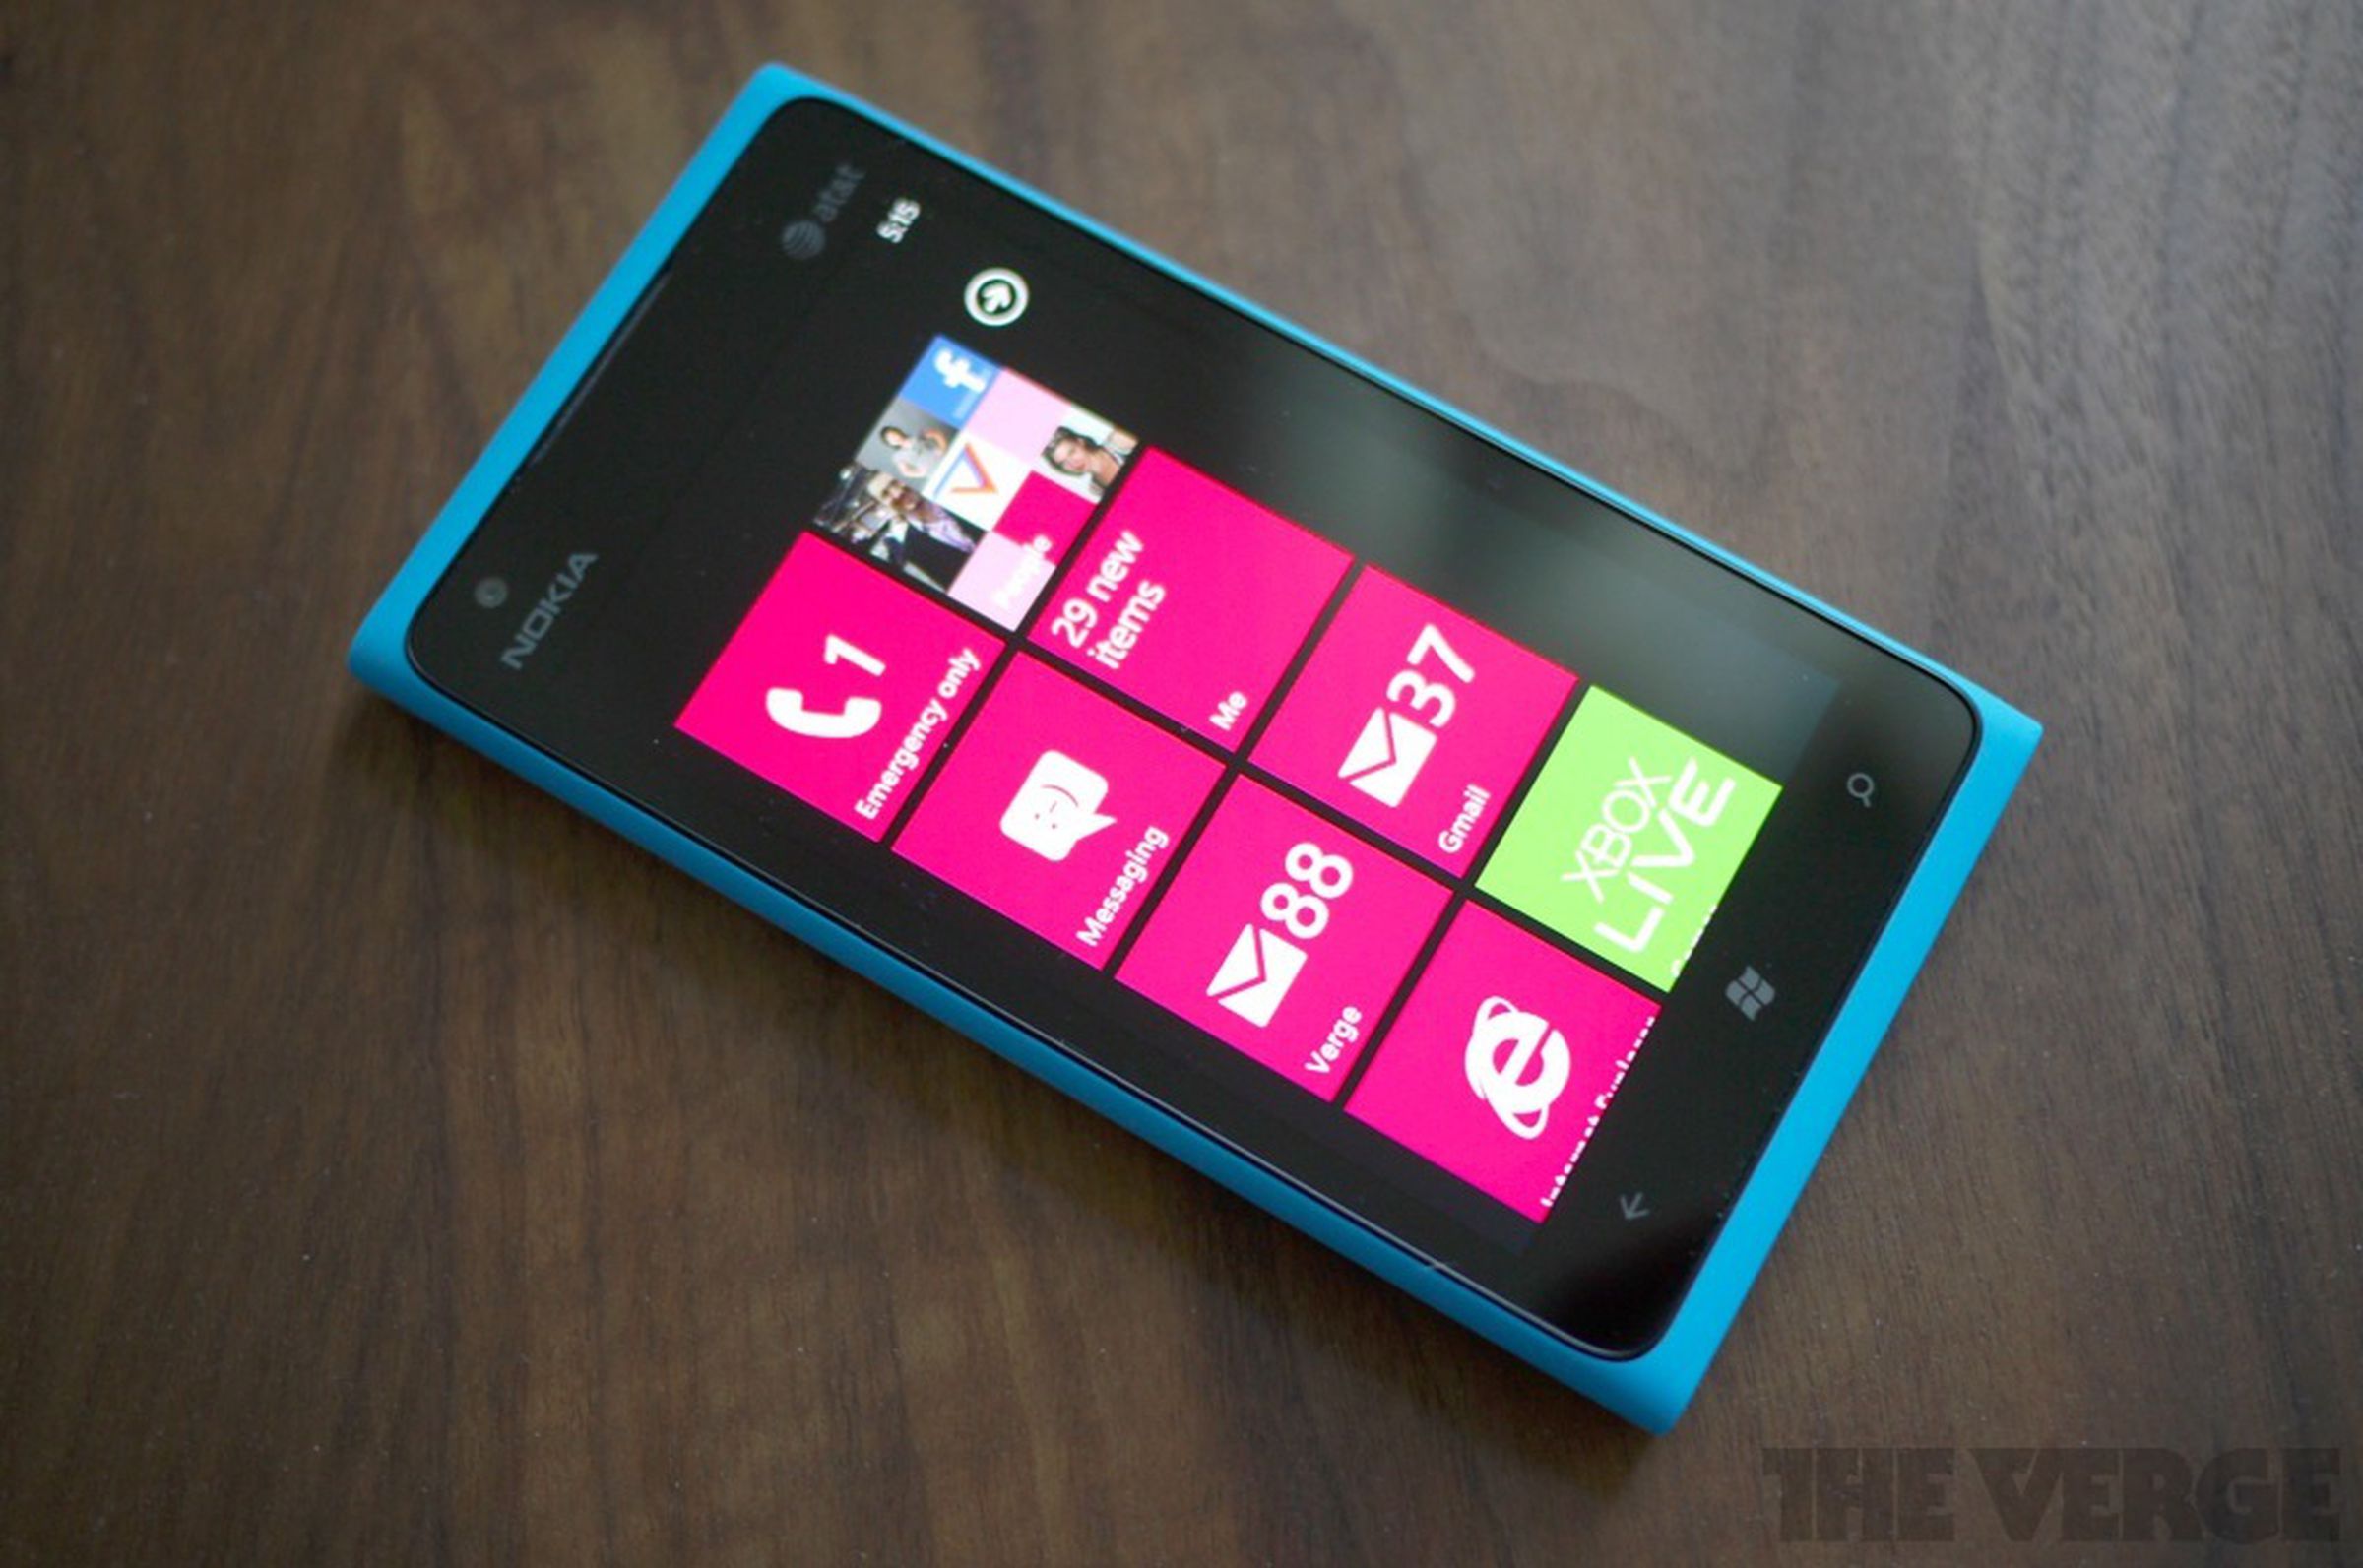 Nokia Lumia 900 review pictures